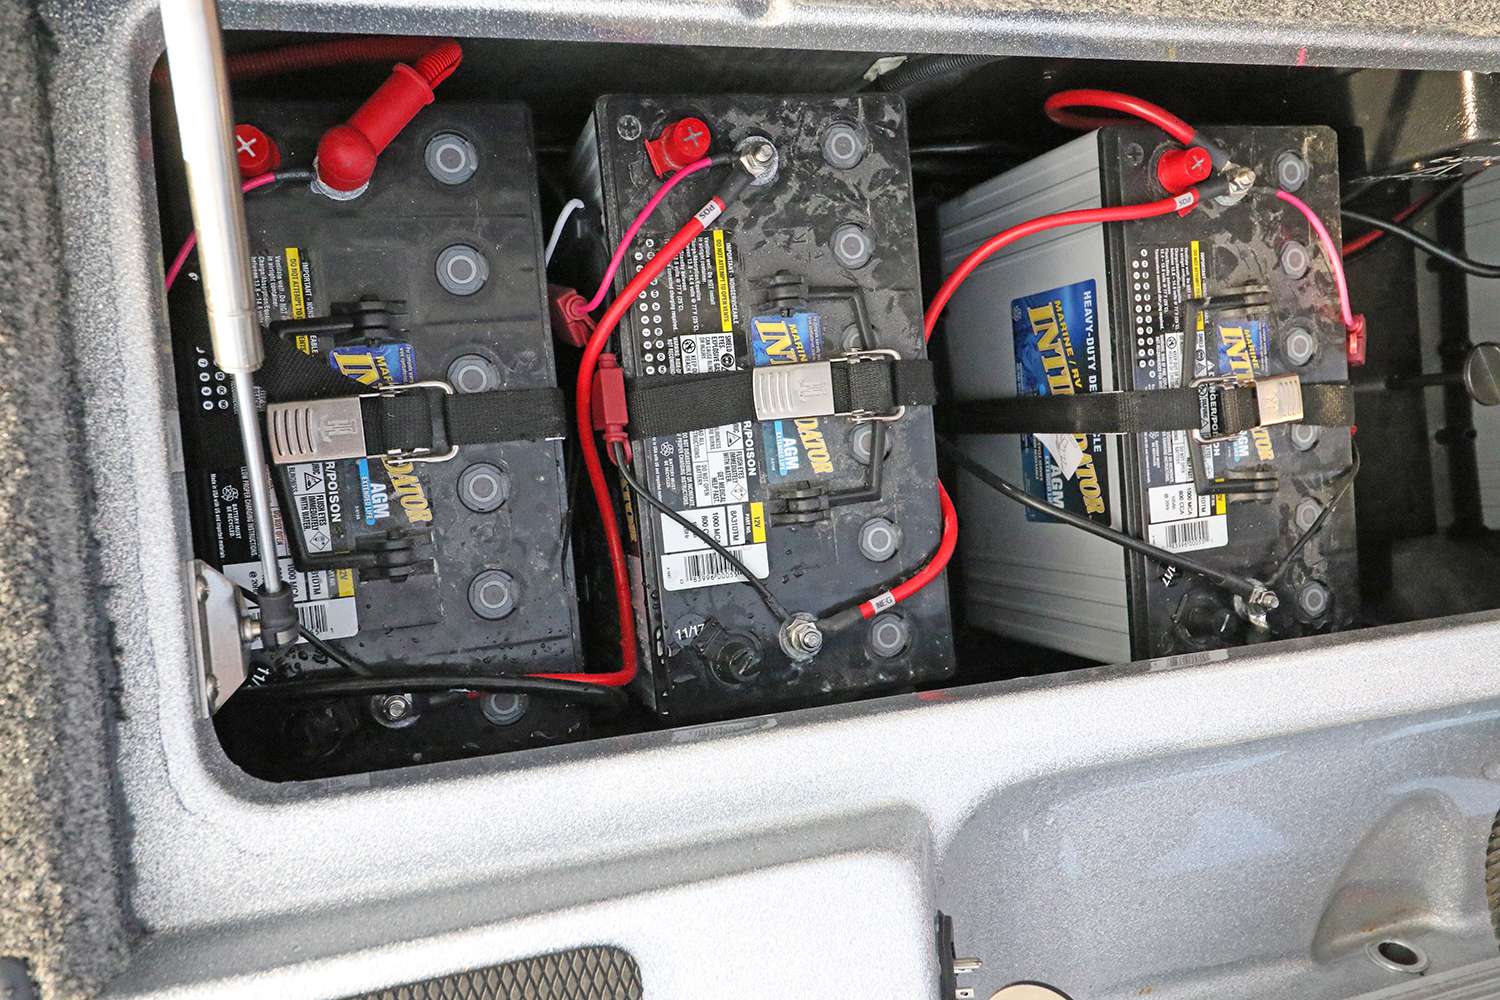 Three 12-volt batteries in a series provide the necessary 36 volts to run his Minn Kota Ultrex.